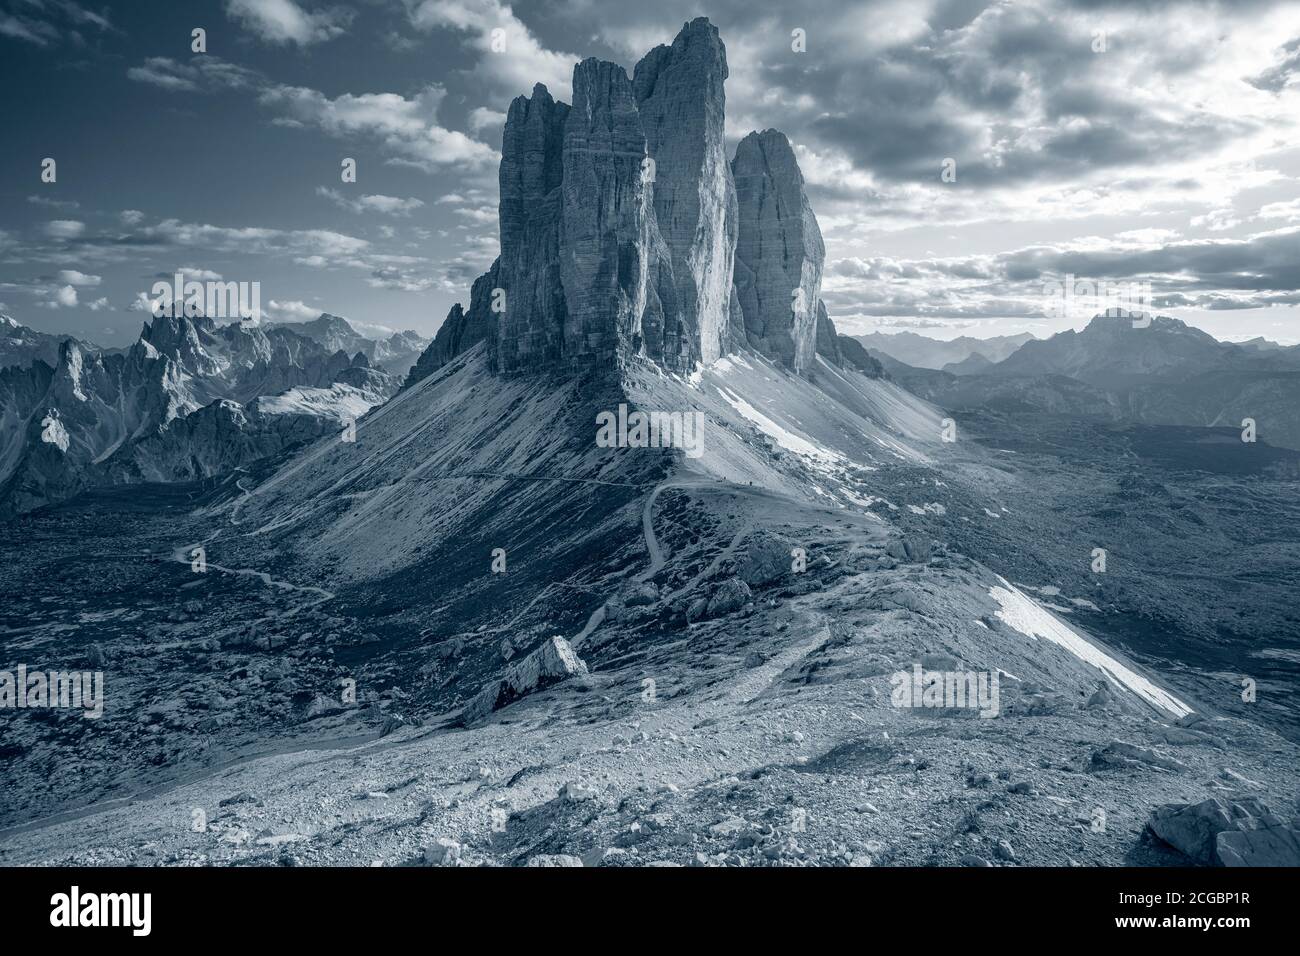 Three Peaks of Lavaredo. Toned image of Italian  Dolomites with famous Three Peaks of Lavaredo (Tre Cime di Lavaredo) South Tyrol, Italy, Europe. Stock Photo